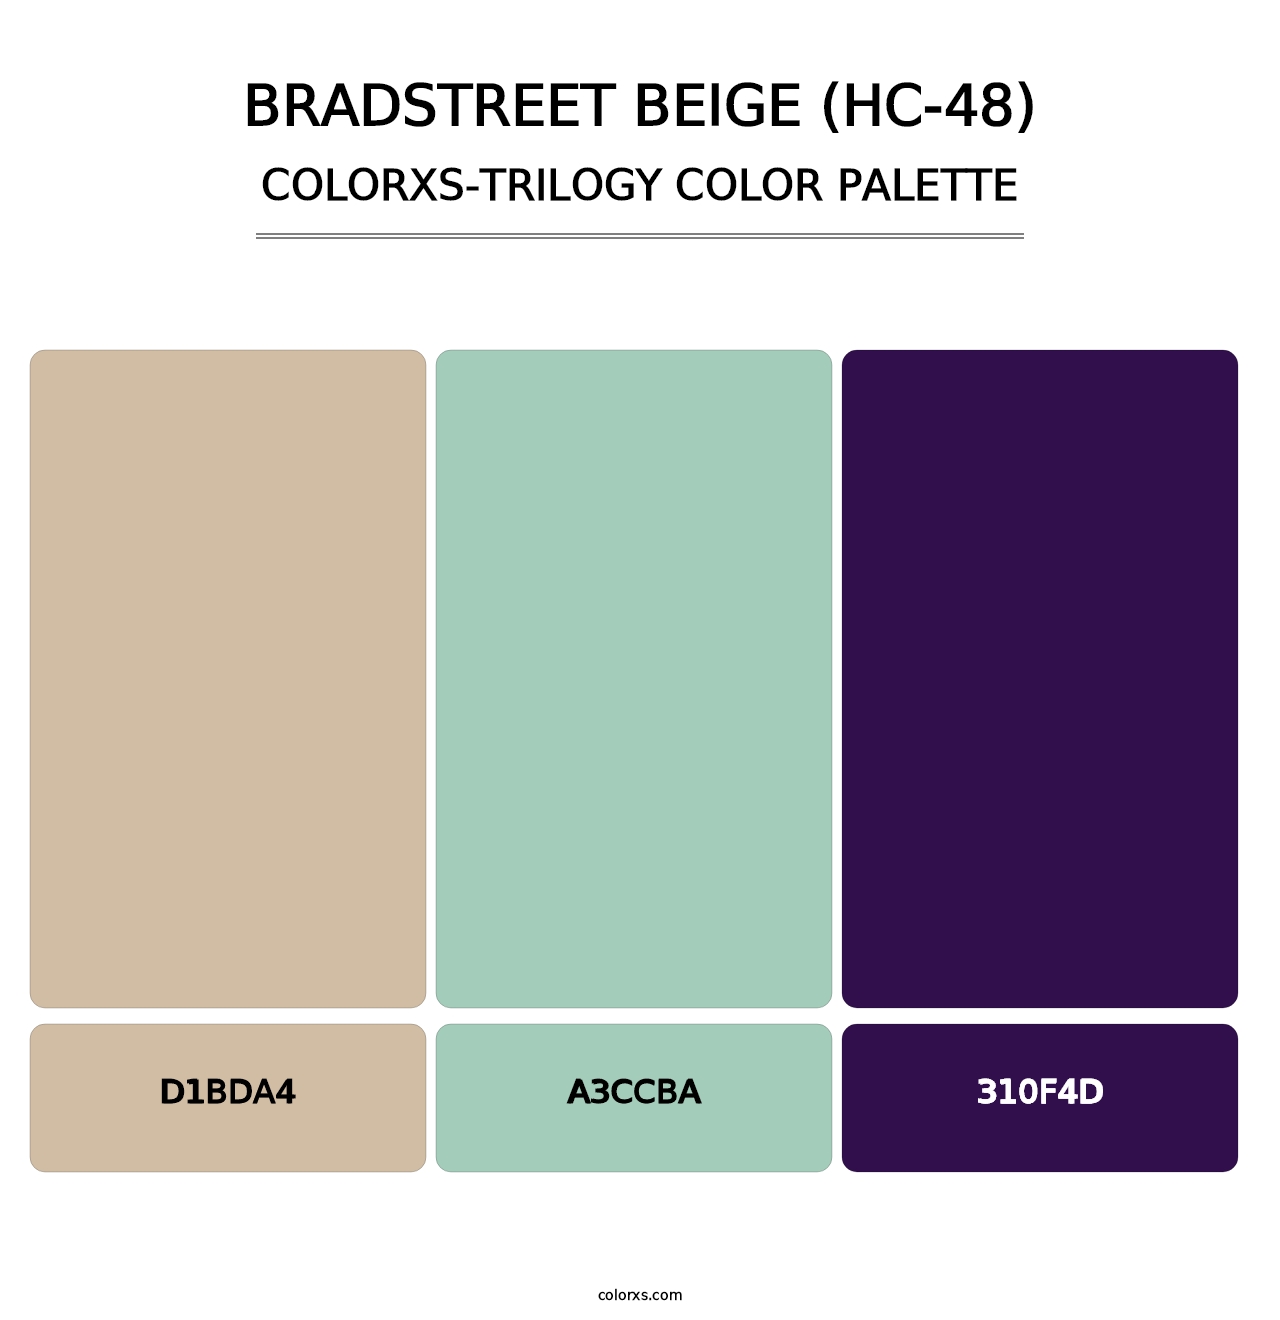 Bradstreet Beige (HC-48) - Colorxs Trilogy Palette